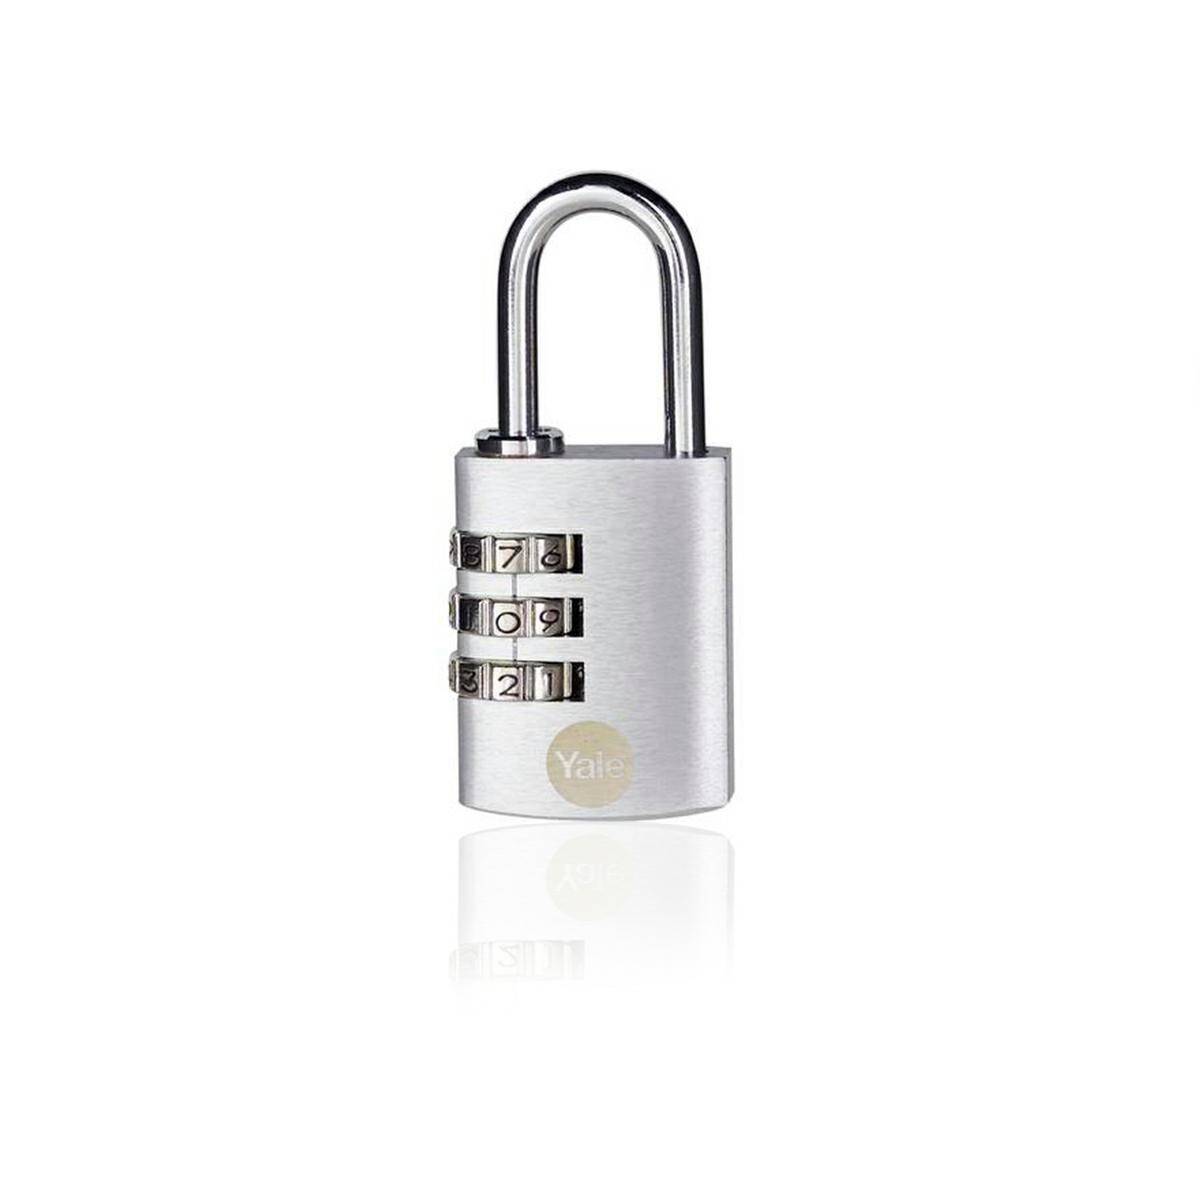 Cypher padlock Yale | brass - silver 32mm